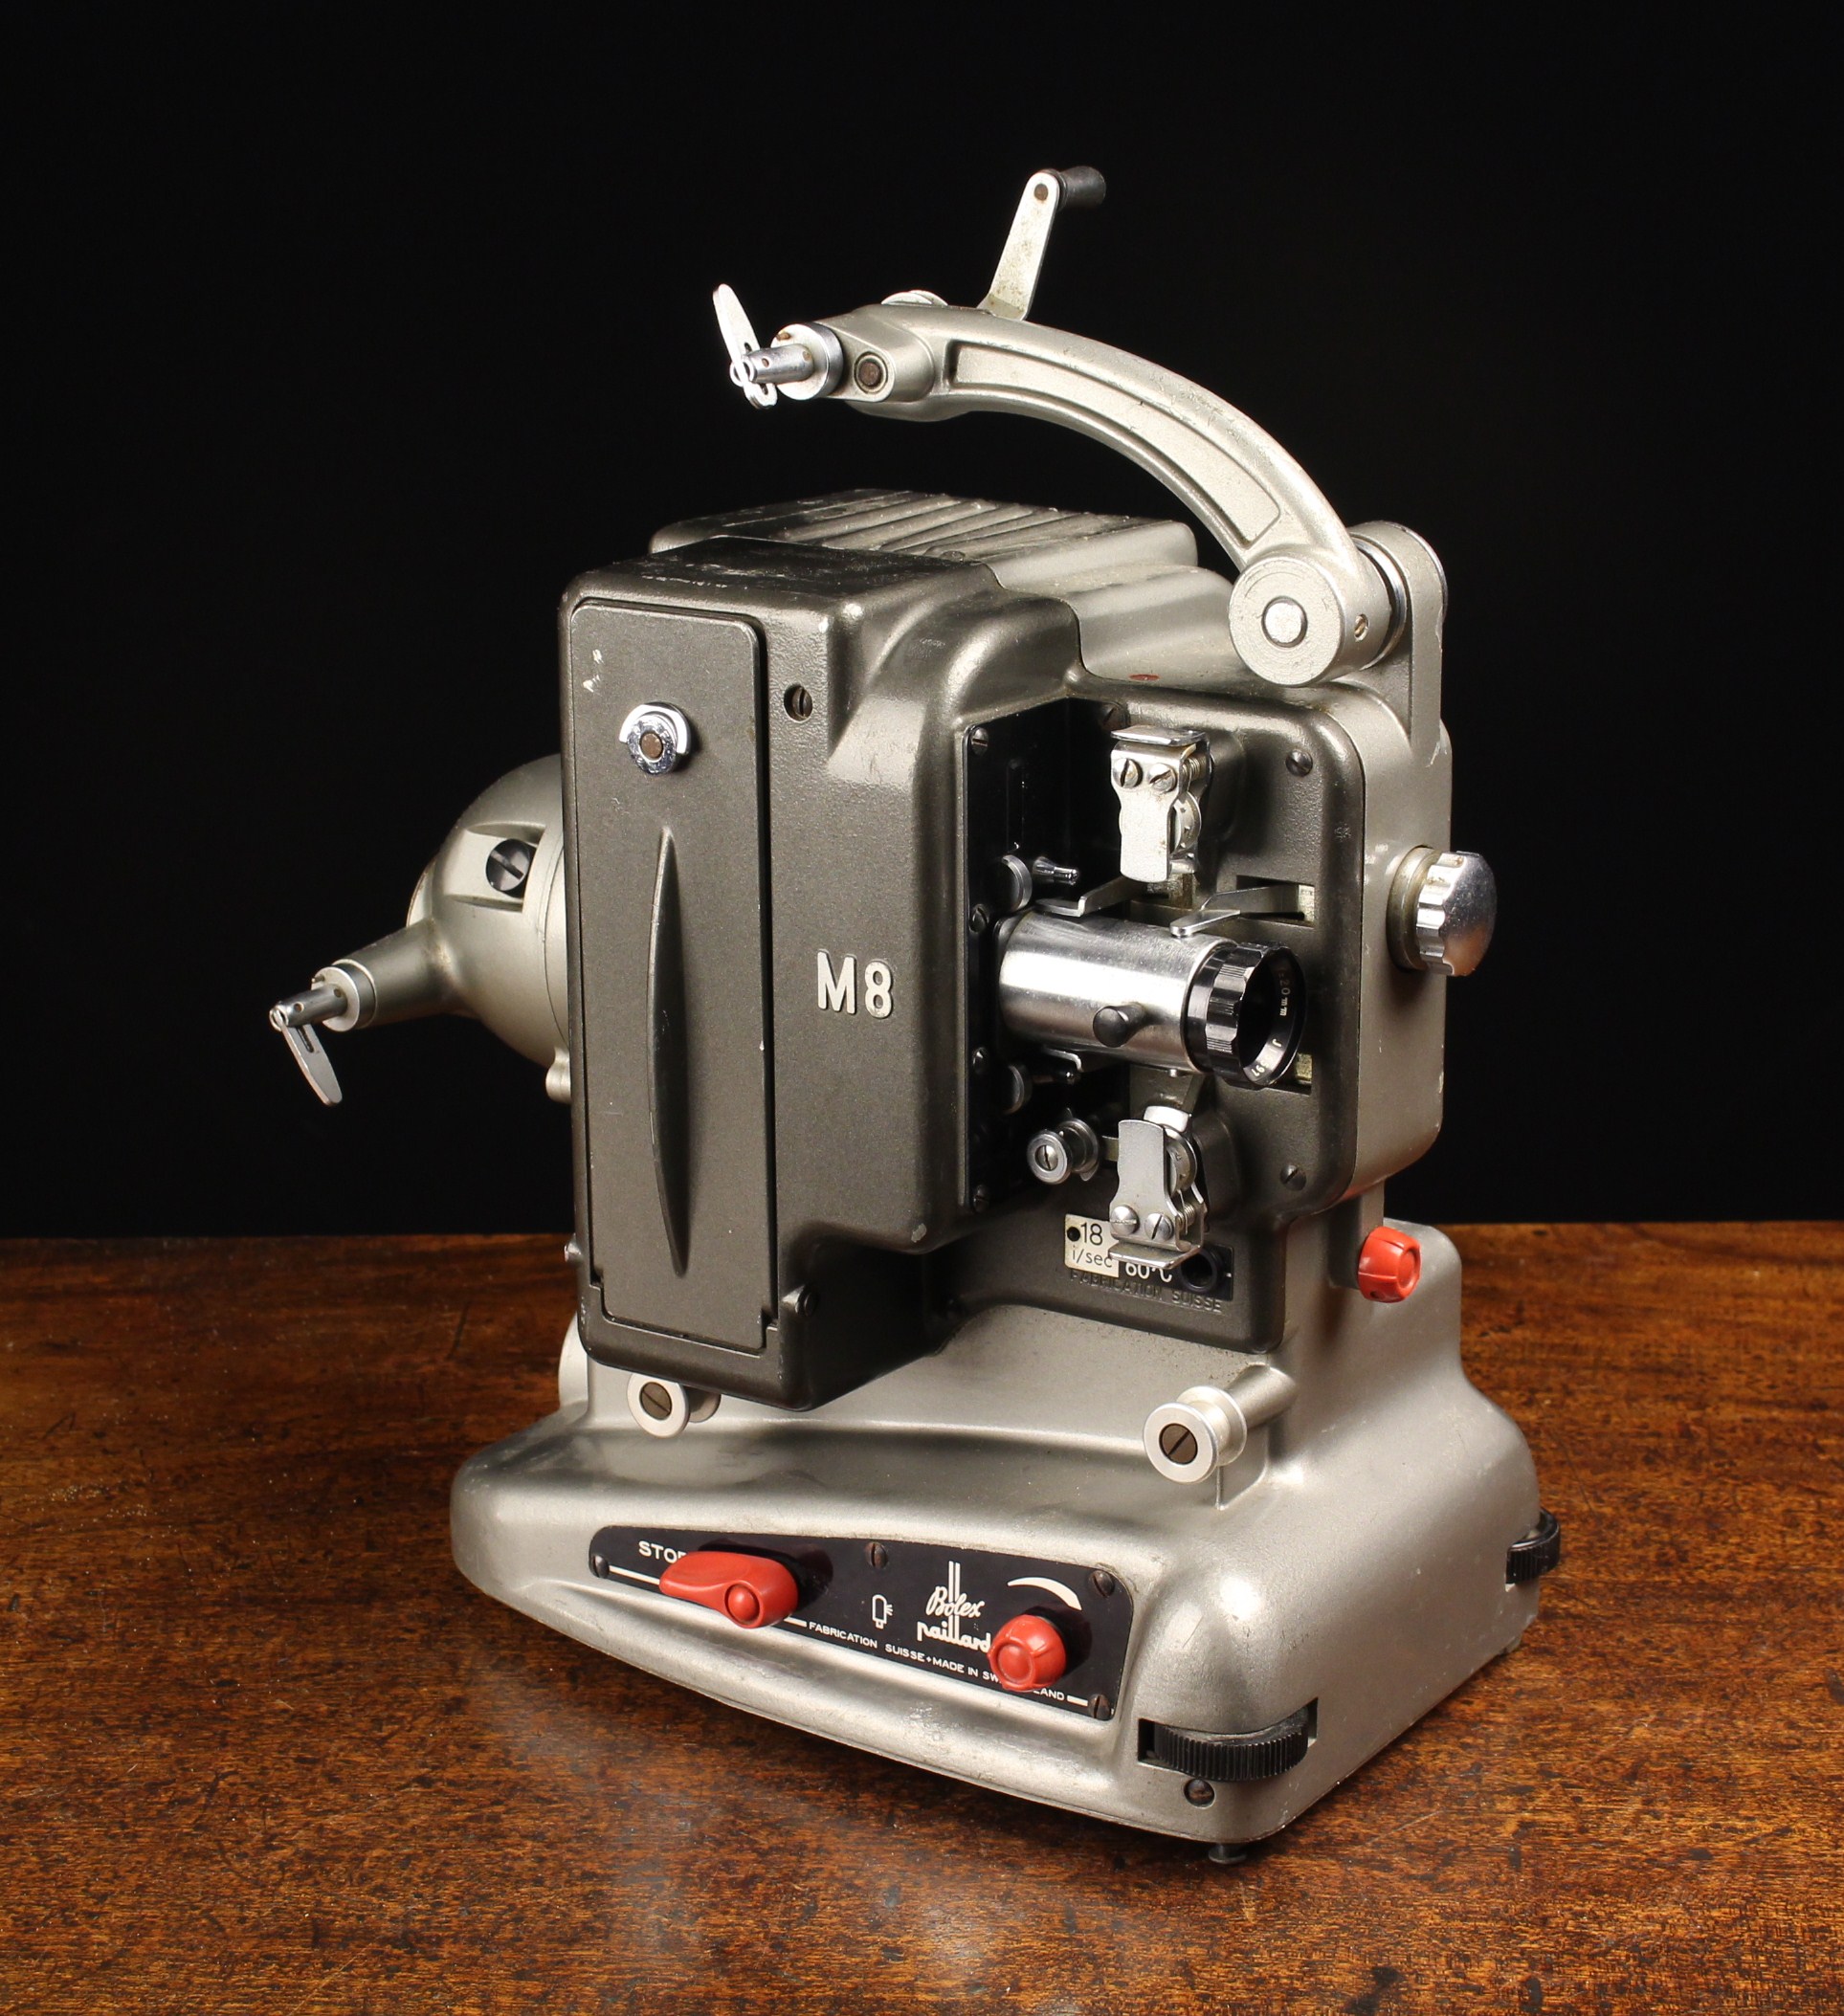 A Vintage Bolex Paillard Standard 8 mm Film Projector with a Bolex Hifi 20mm f 1.3 lens No.